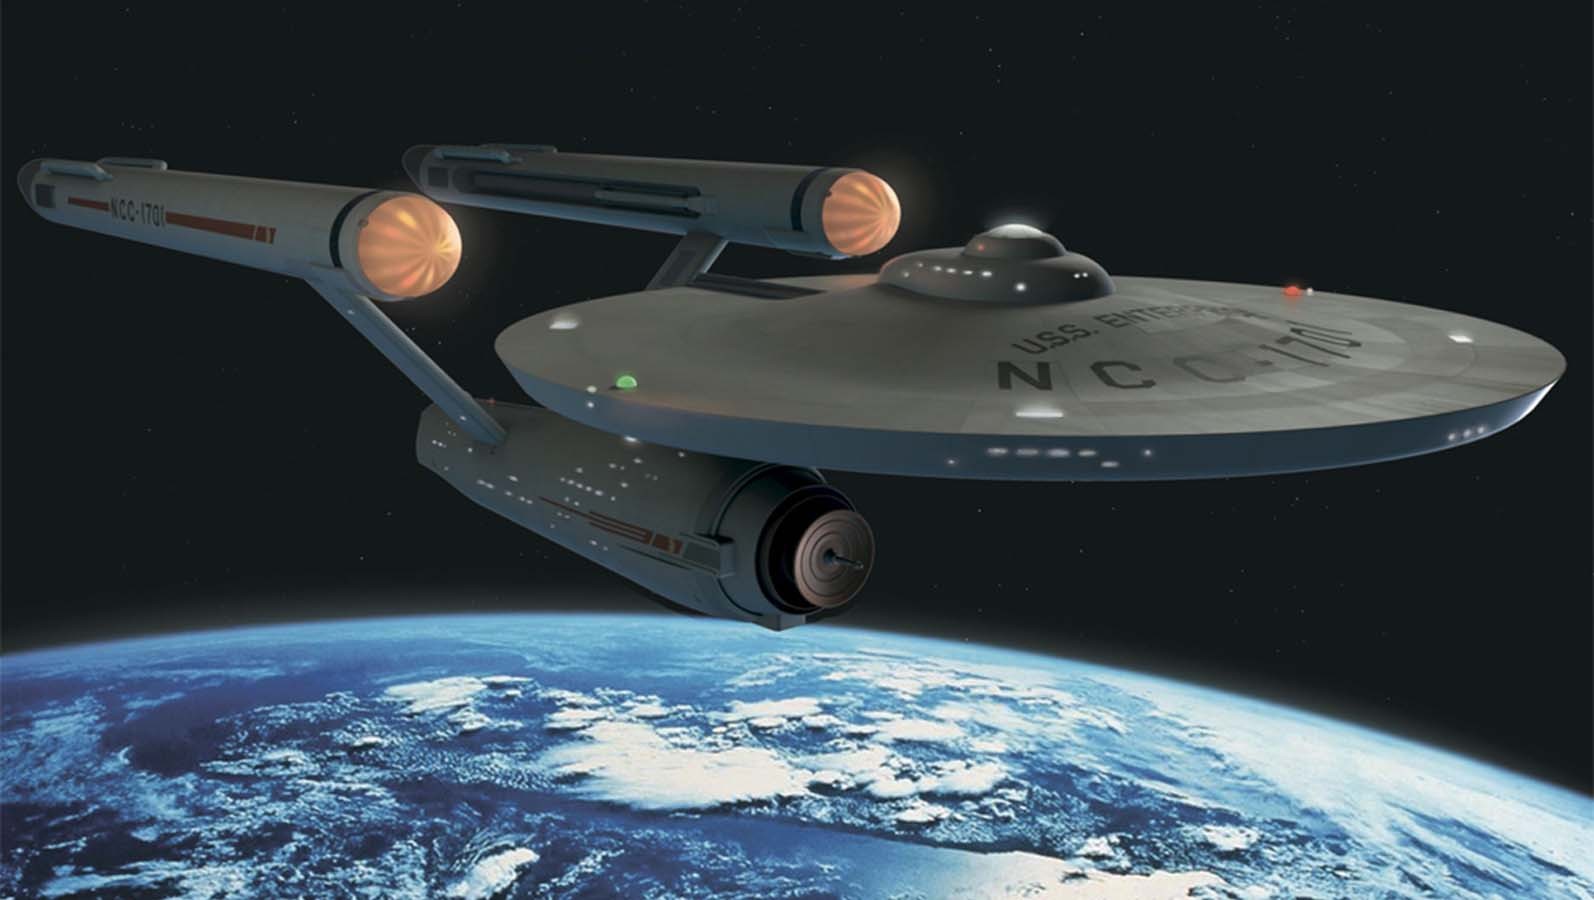 Science Fiction Star Trek Ncc 1701 USS Enterprise NCC 1701 Tv Series Spaceship Vehicle 1594x900